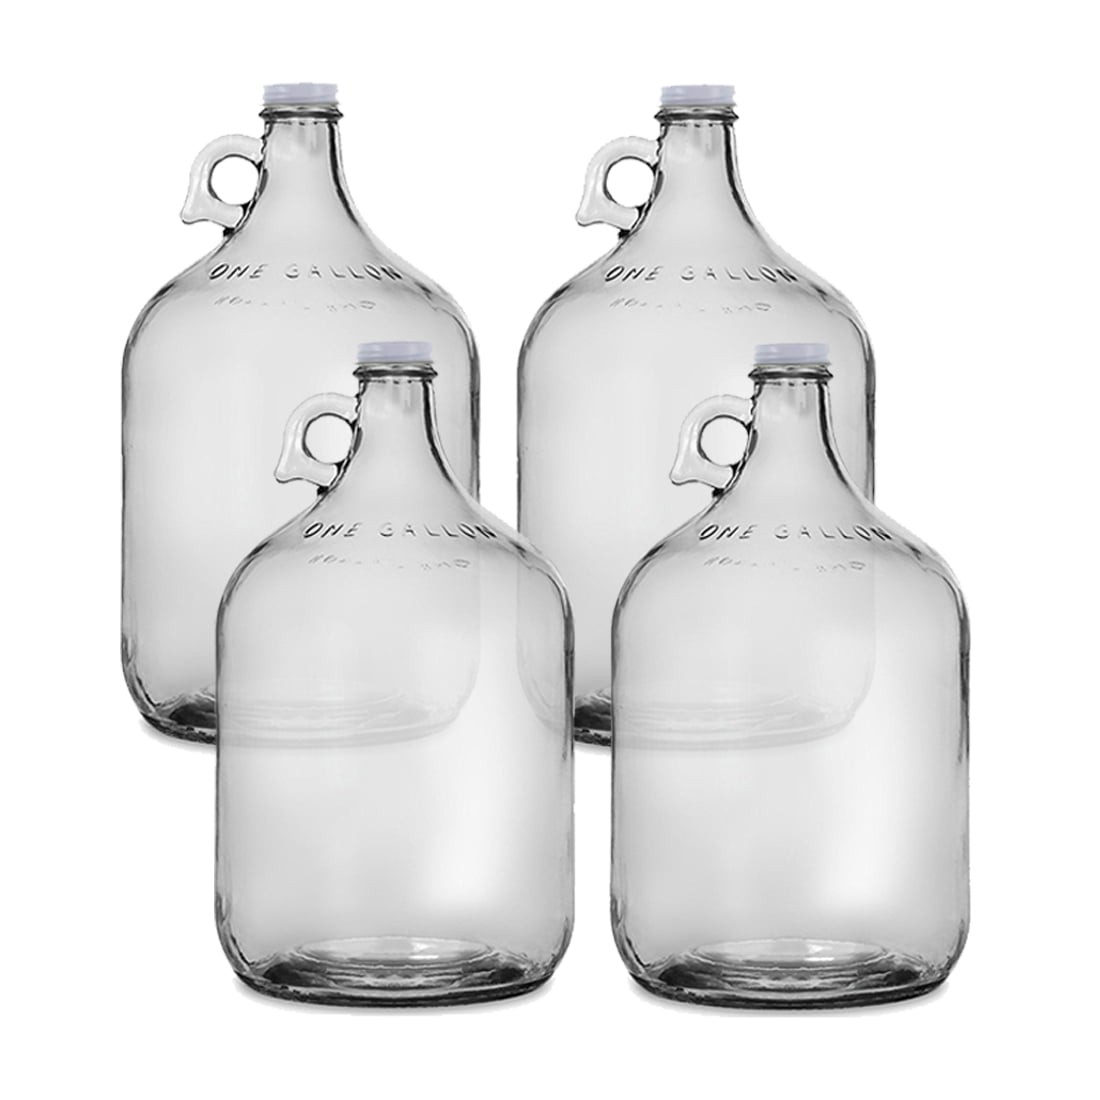 JoyJolt Spring Reusable Glass Water Bottles Set of 6-18 oz Glass Drinking  Bottles with Lids